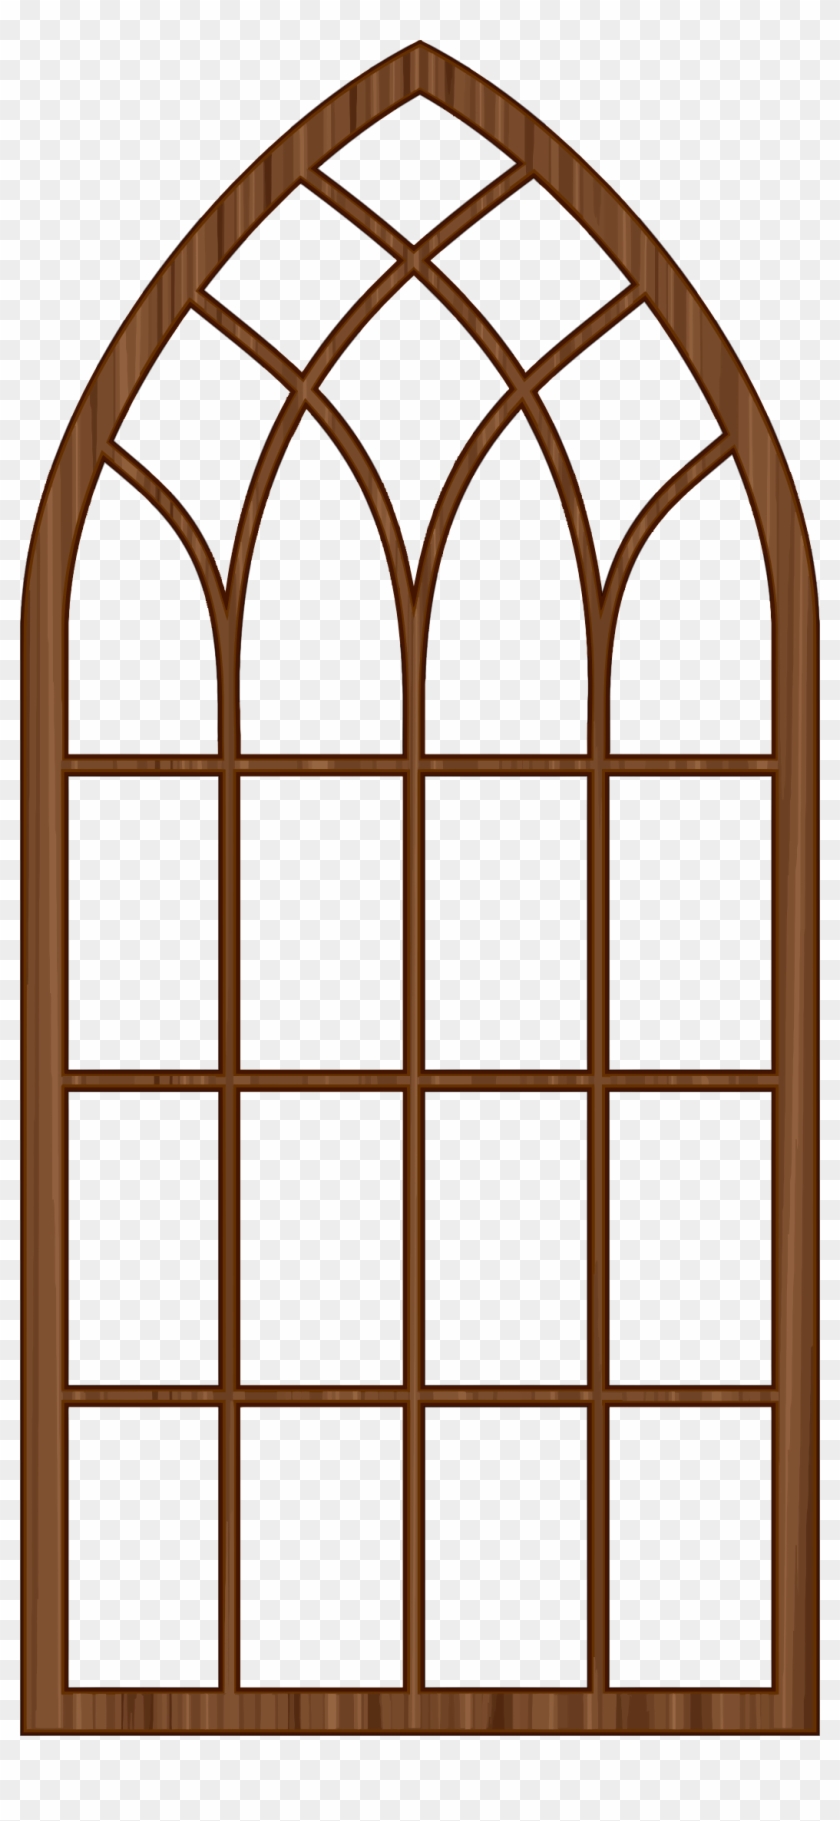 Big Image - Wood Window Frame Png #1163717